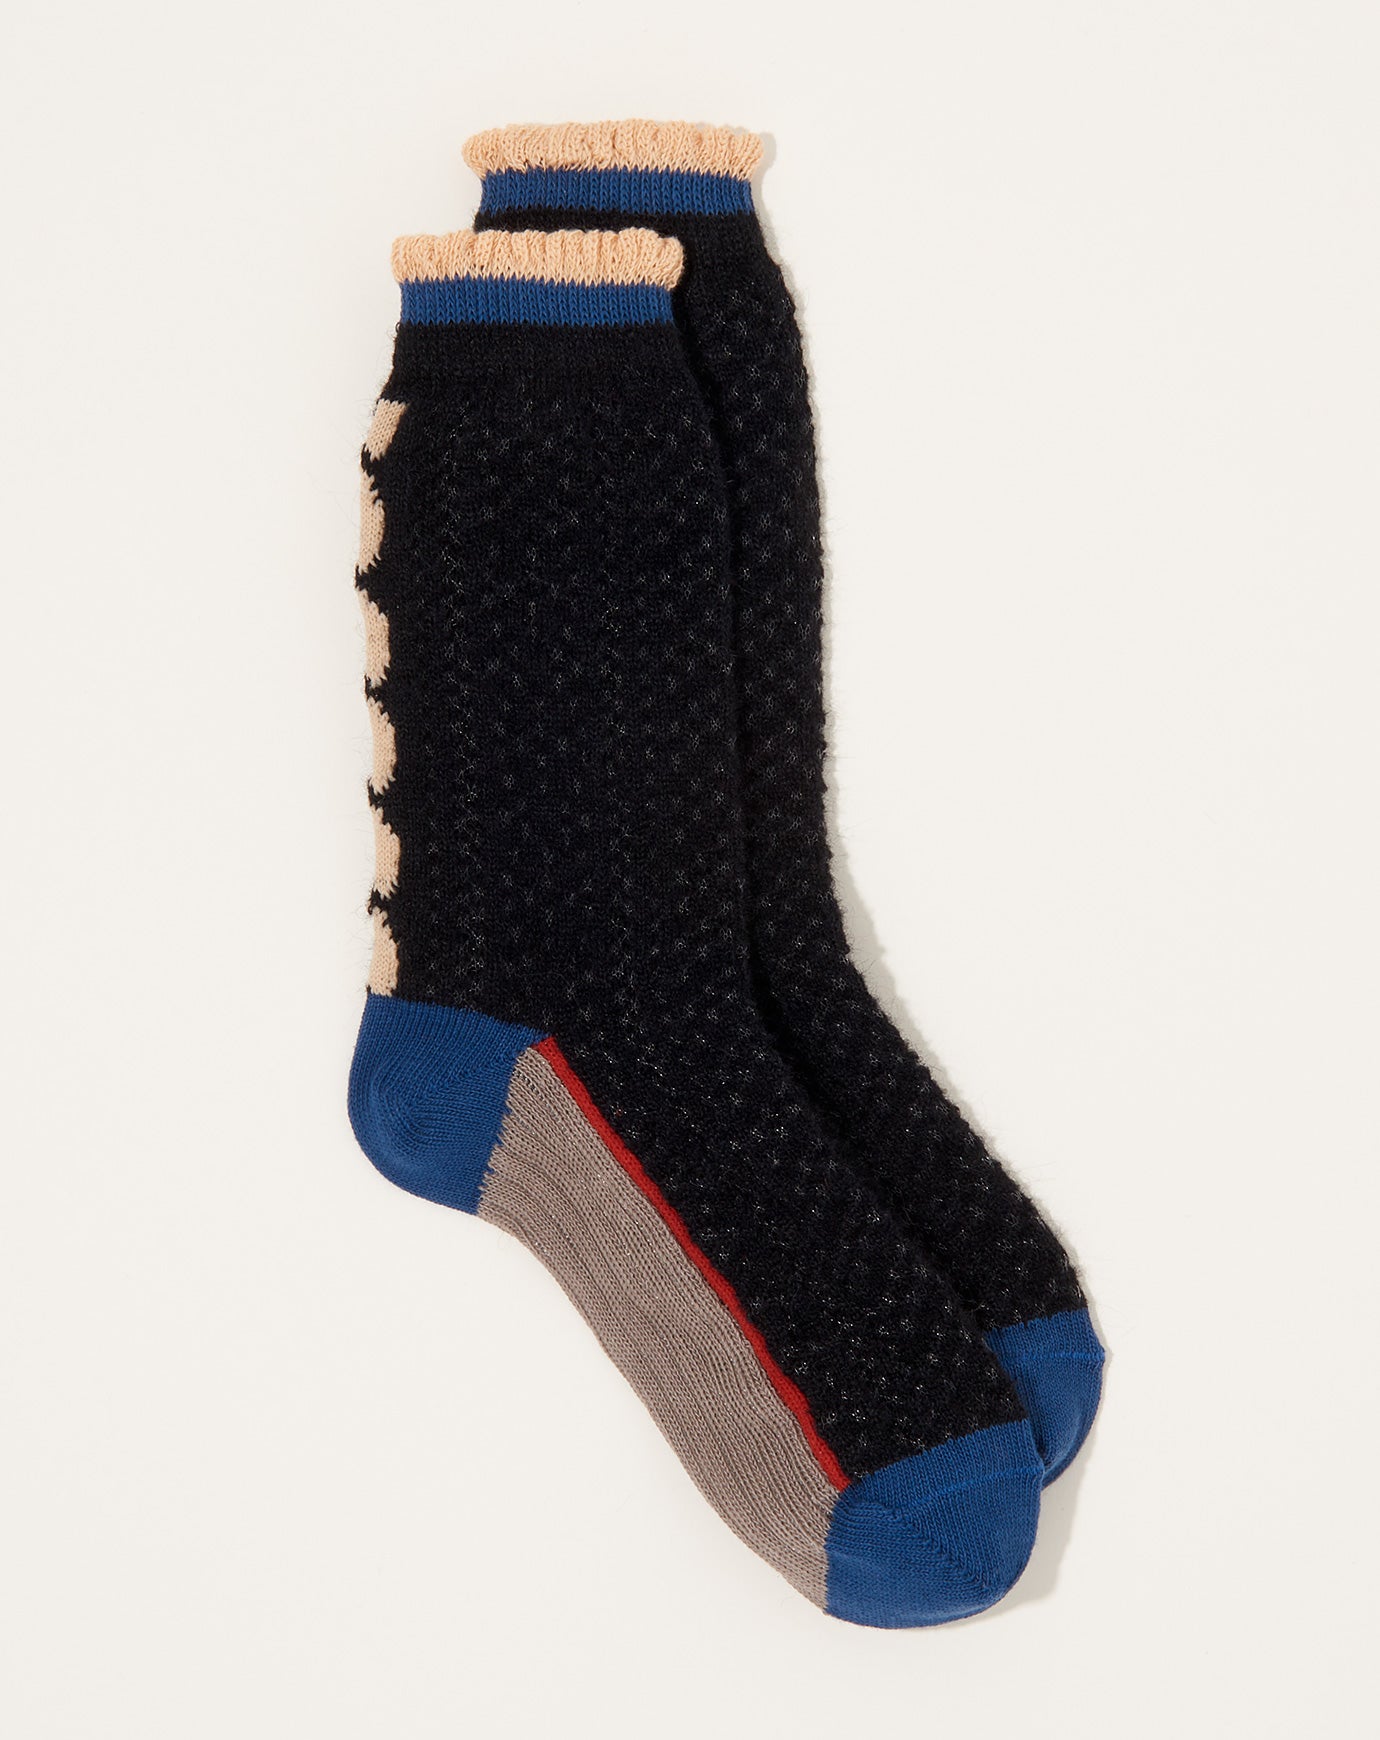 Exquisite J Mohair Simple Braid Socks in Navy